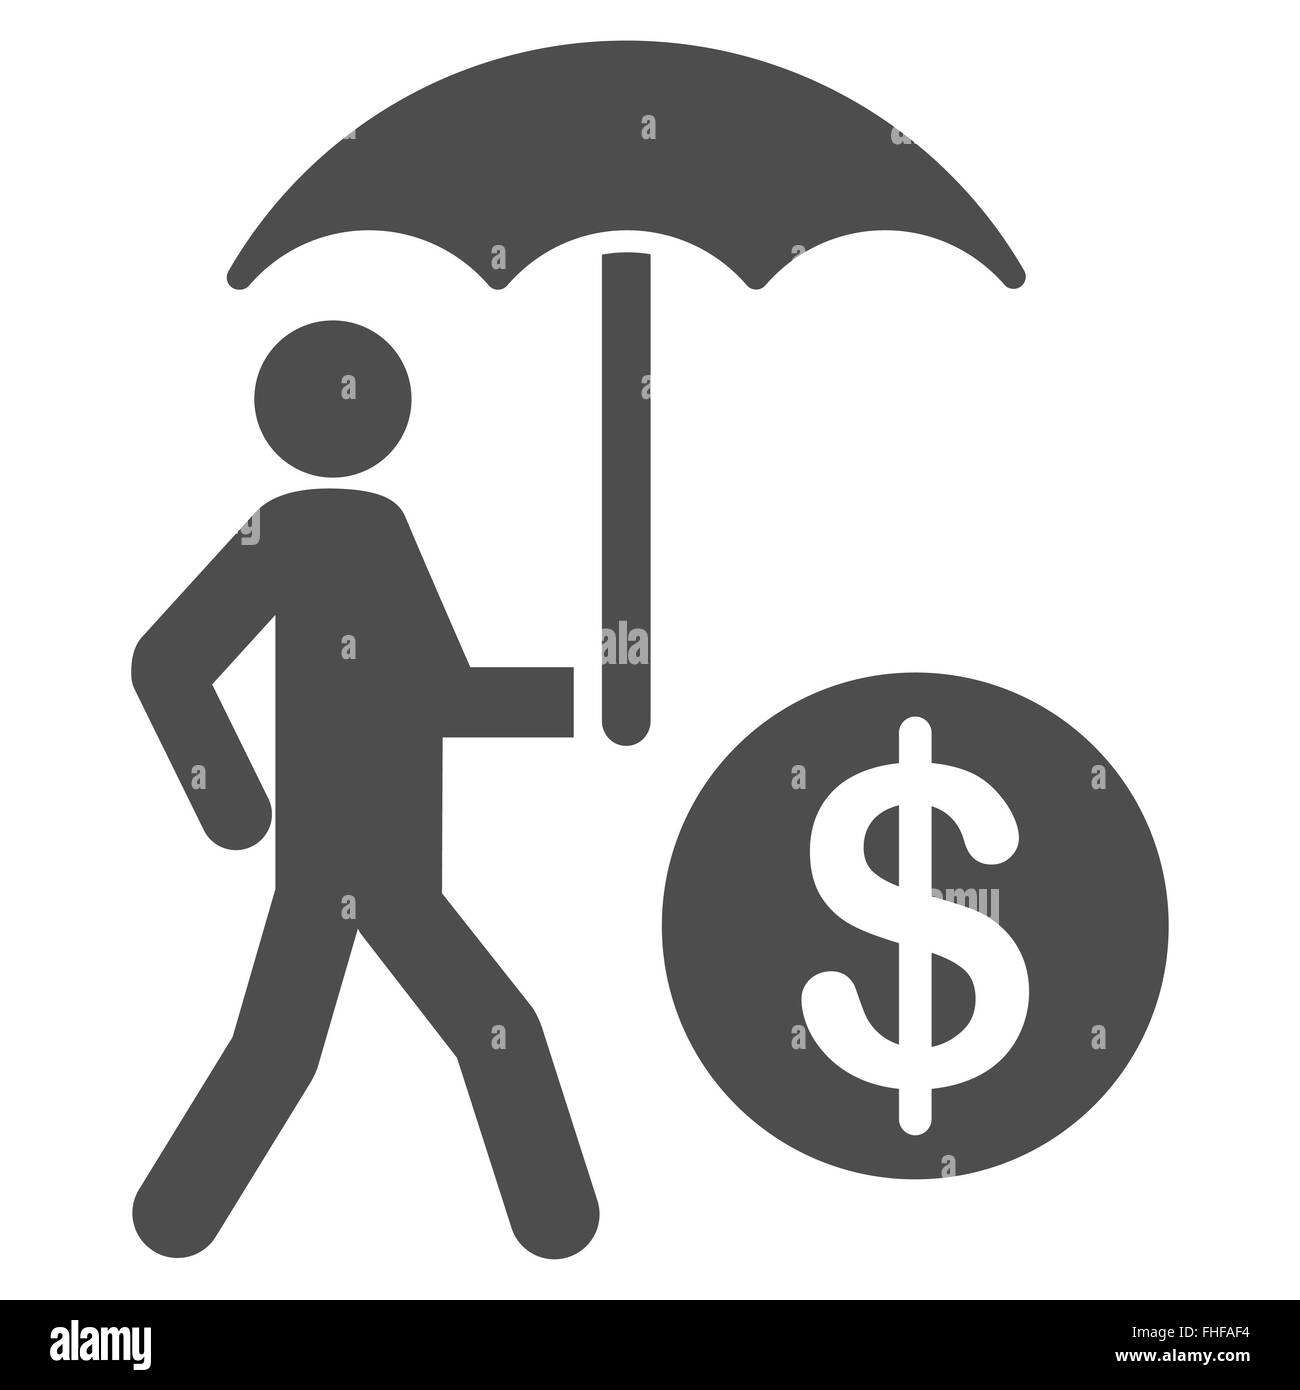 Financial insurance icon Stock Photo